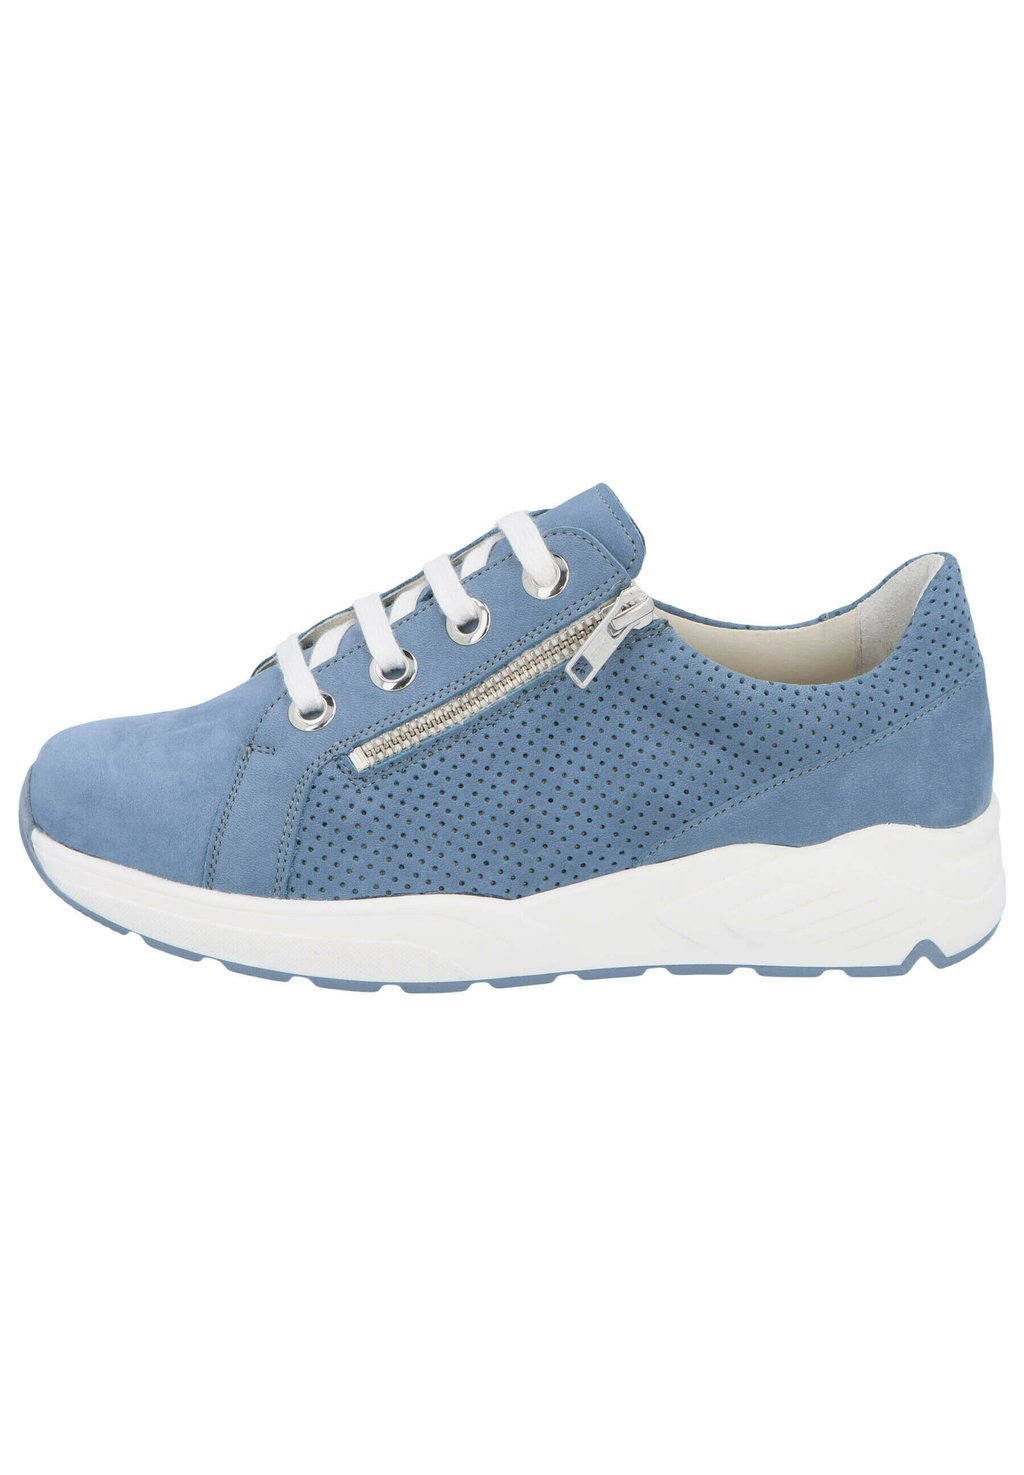 спортивные туфли на шнуровке kaja solidus цвет verona verona flecht jade Спортивные туфли на шнуровке MIA Solidus, цвет blau